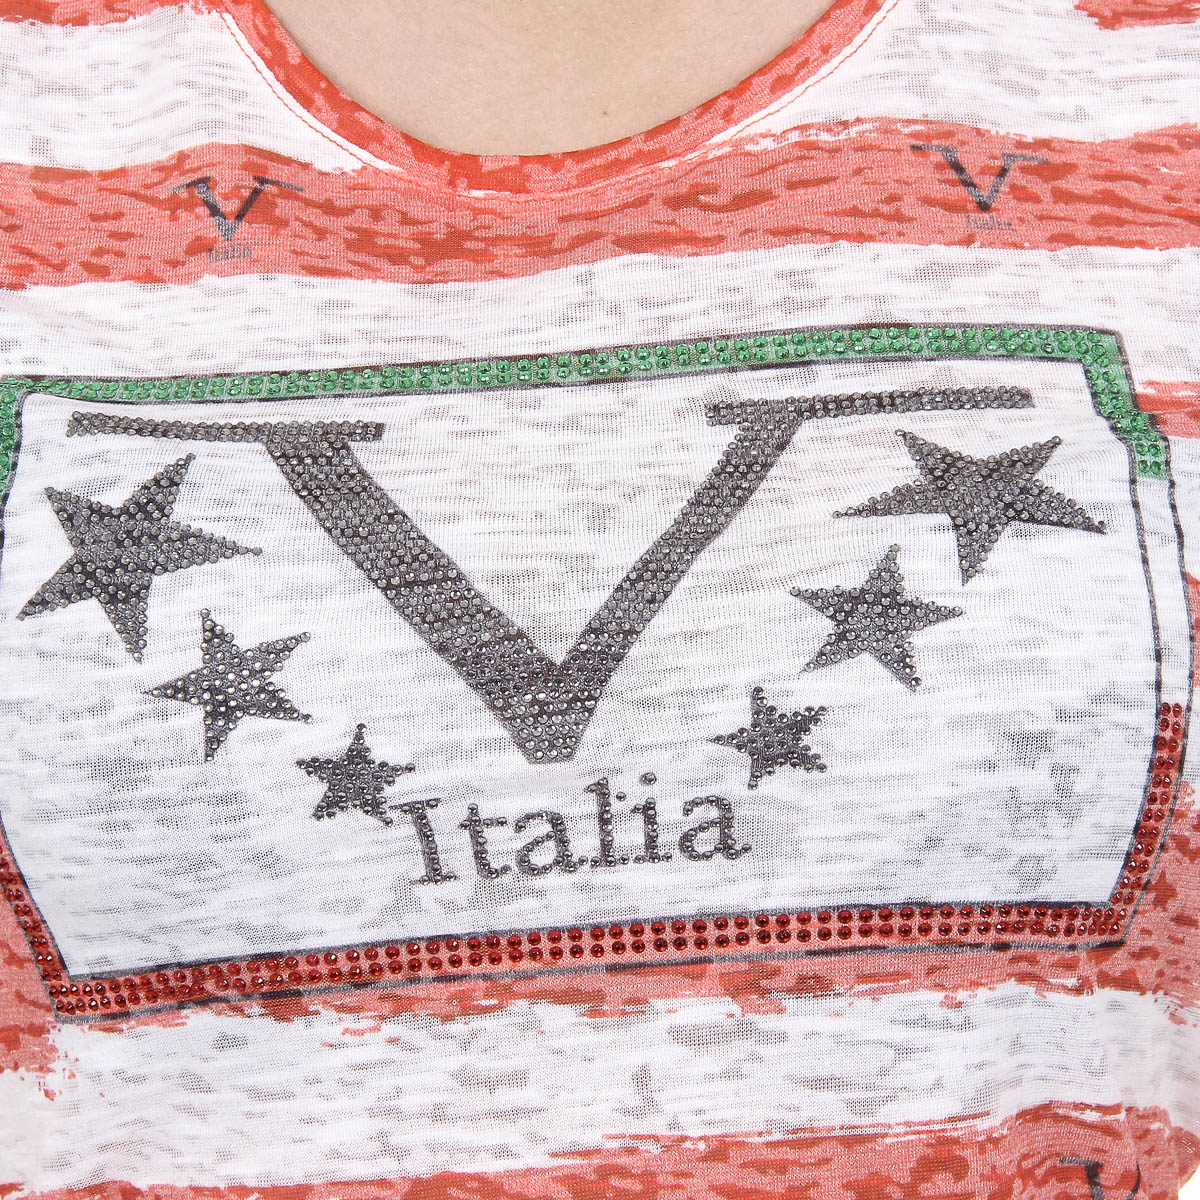 V 1969 Italia Womens T-shirt Short Sleeves Round Neck Multicolor CHARLOTTE